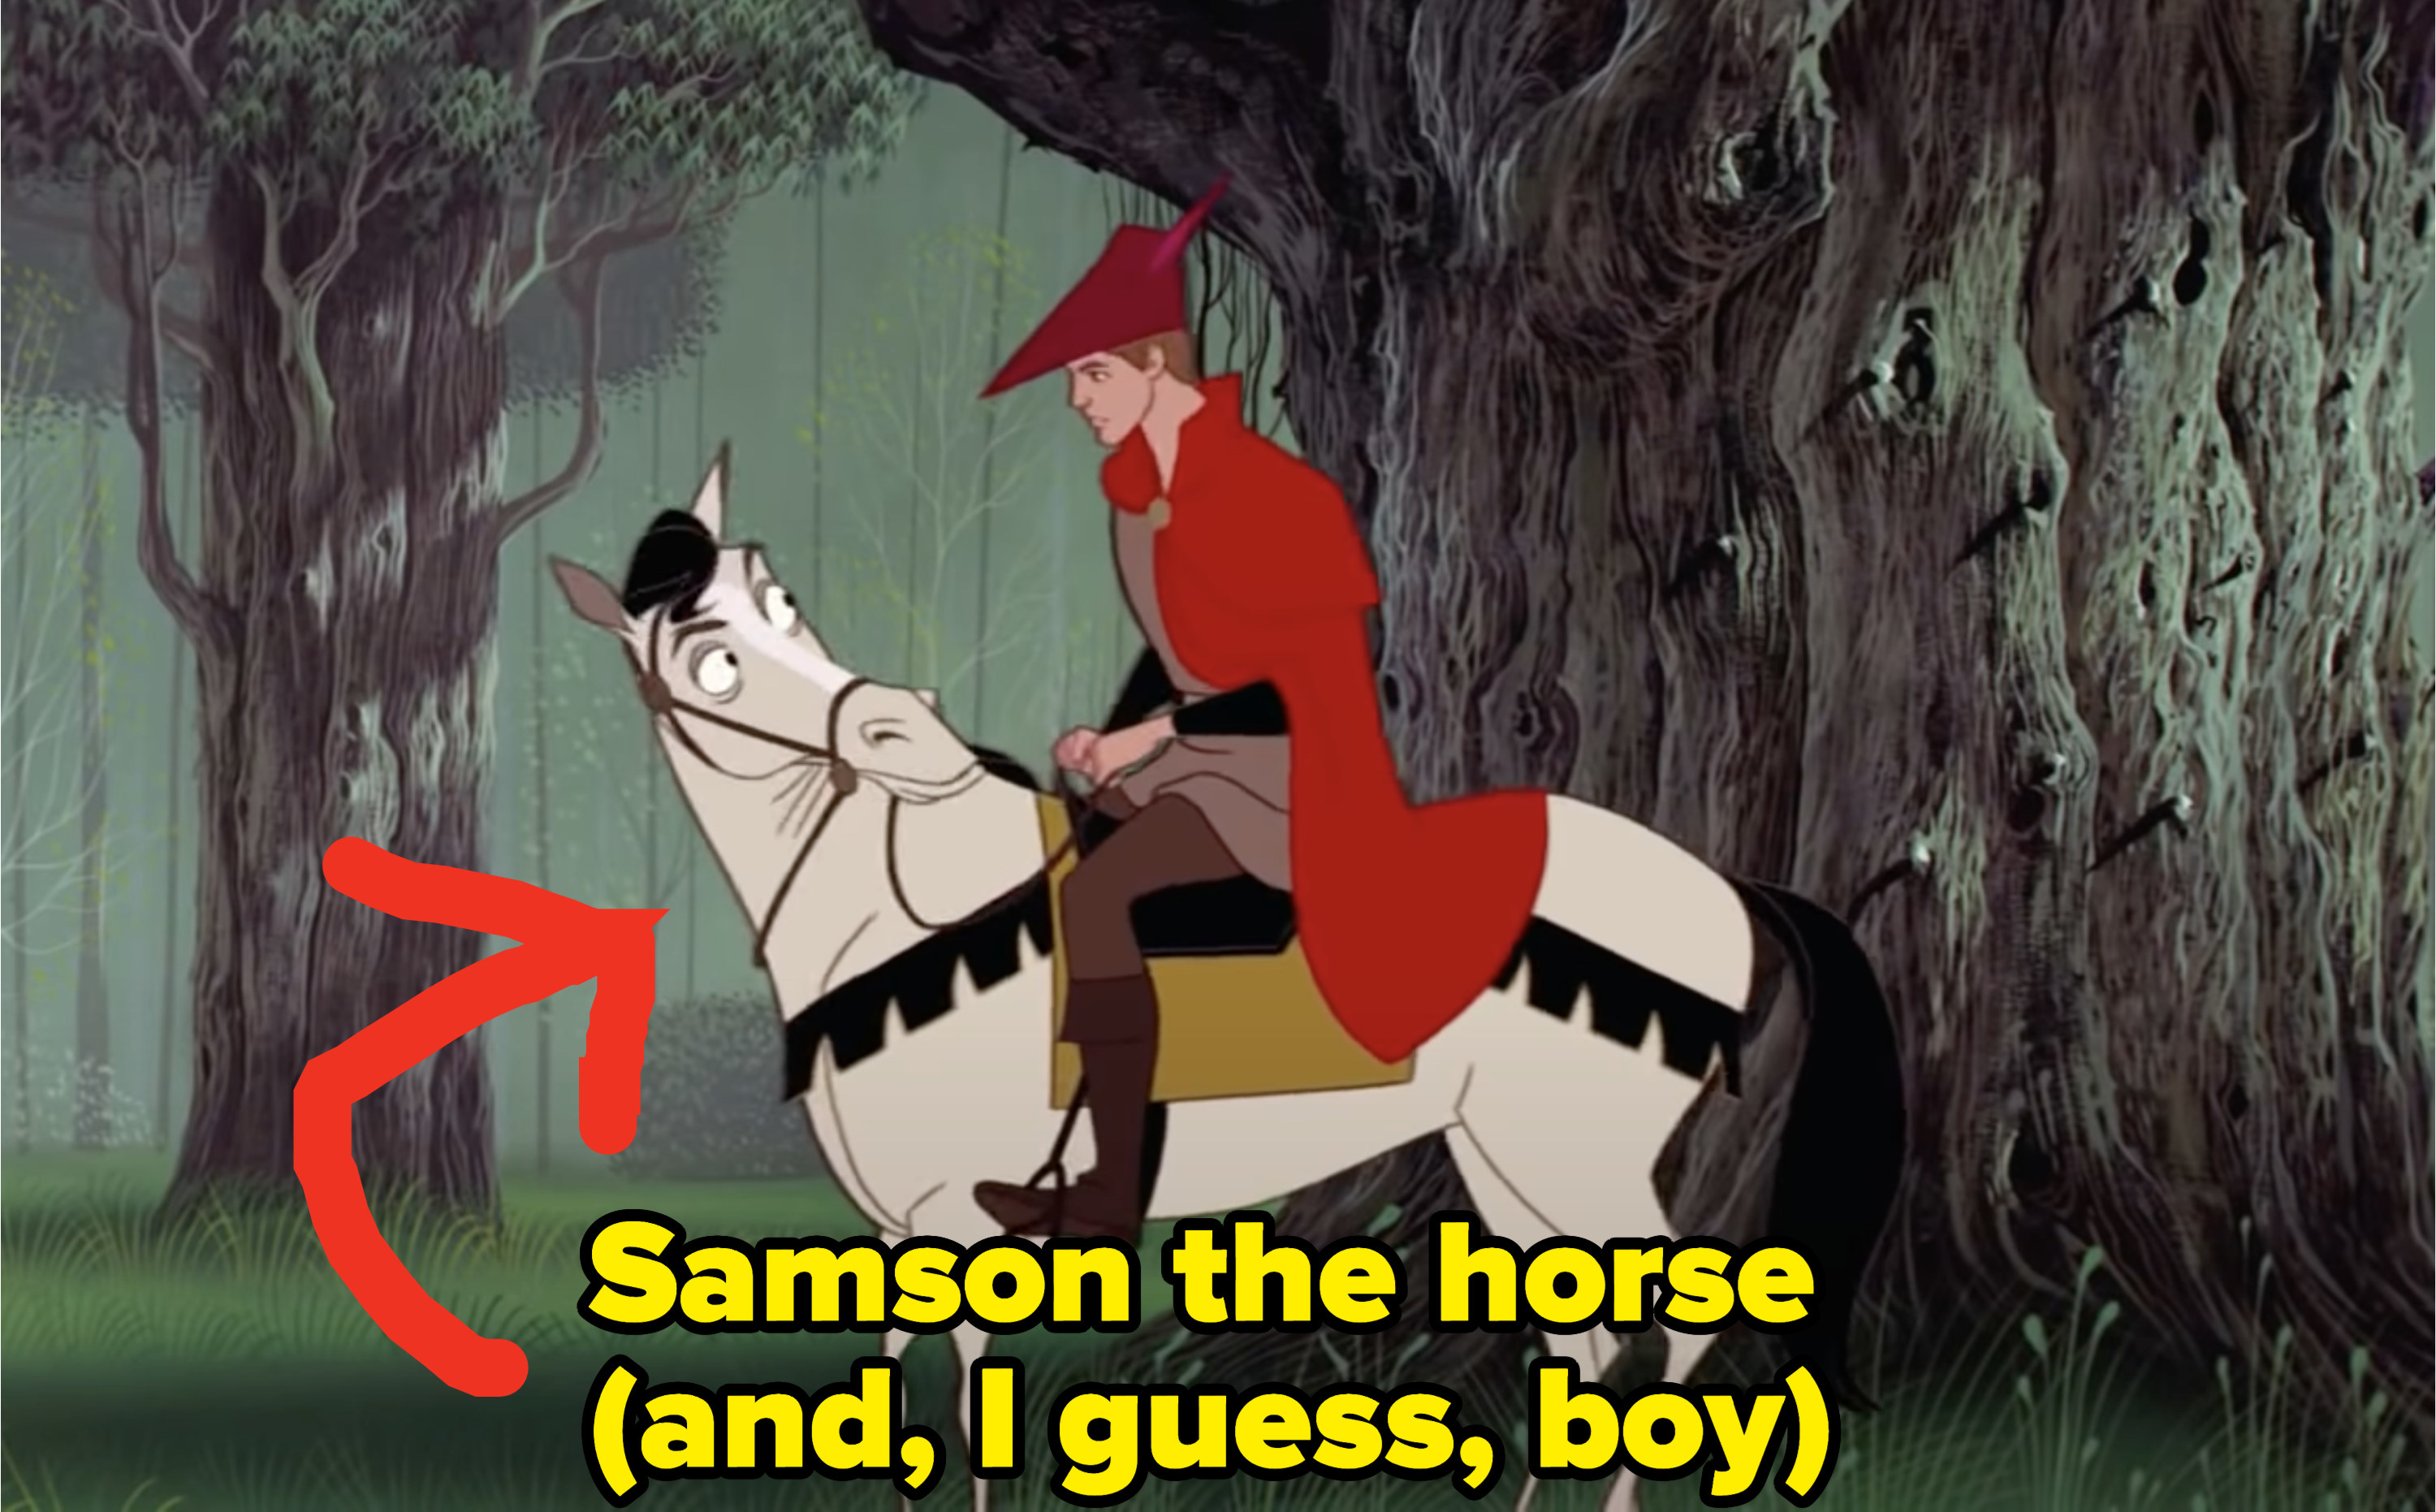 Samson the horse from sleeping beauty